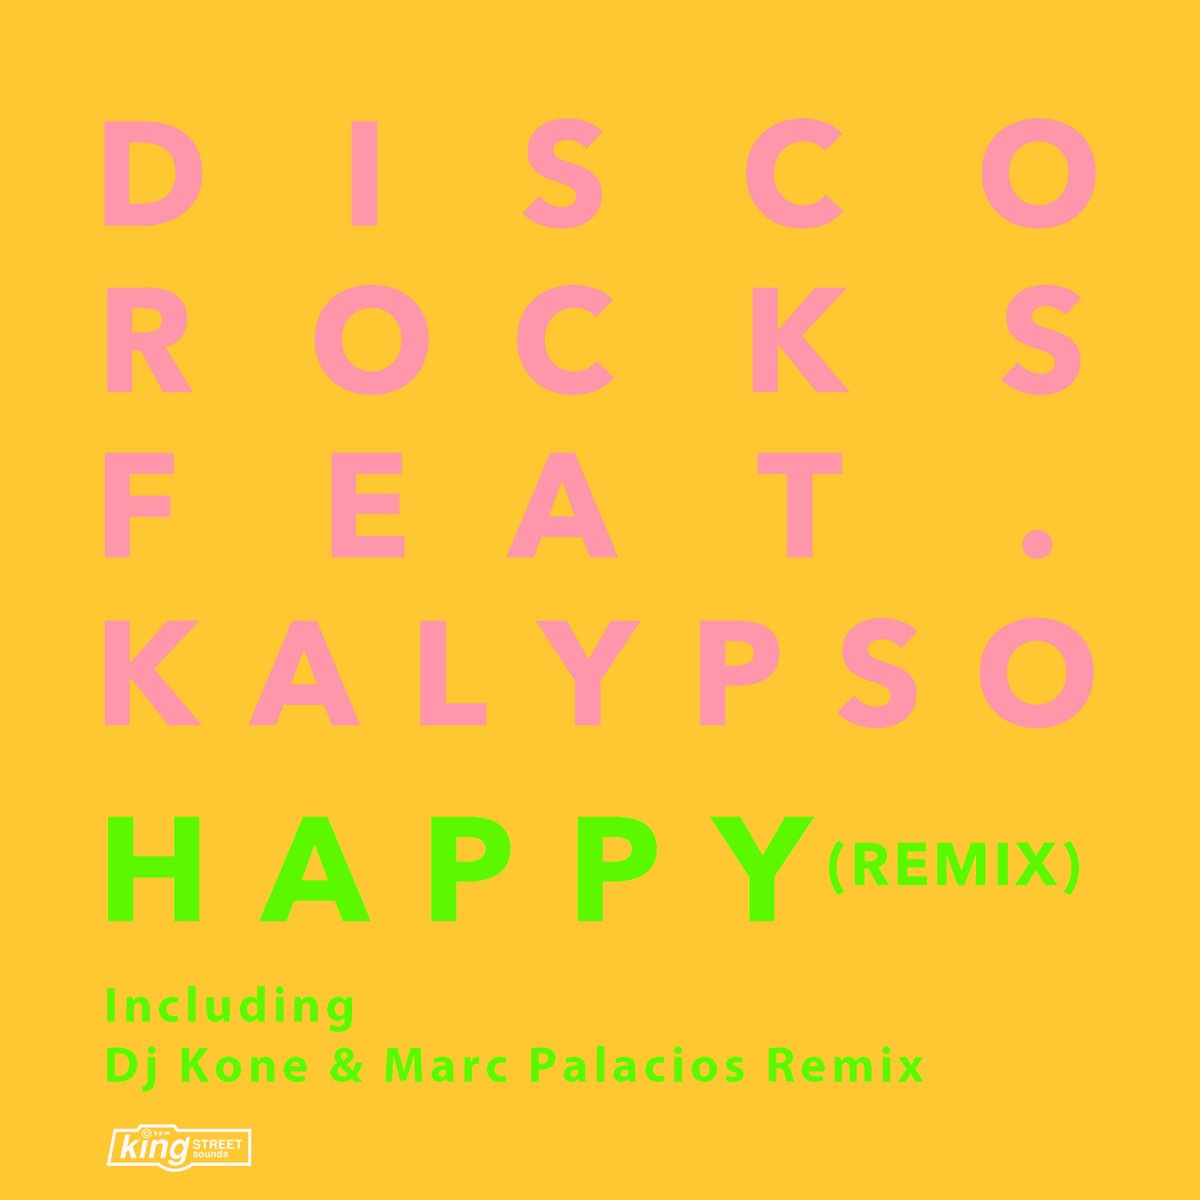 Be happy remix. TJ stay Happy Remix. Kalypso-discorocks-Happy-Full-intentions-met-Life-Remix. Discorocks & Nakia.